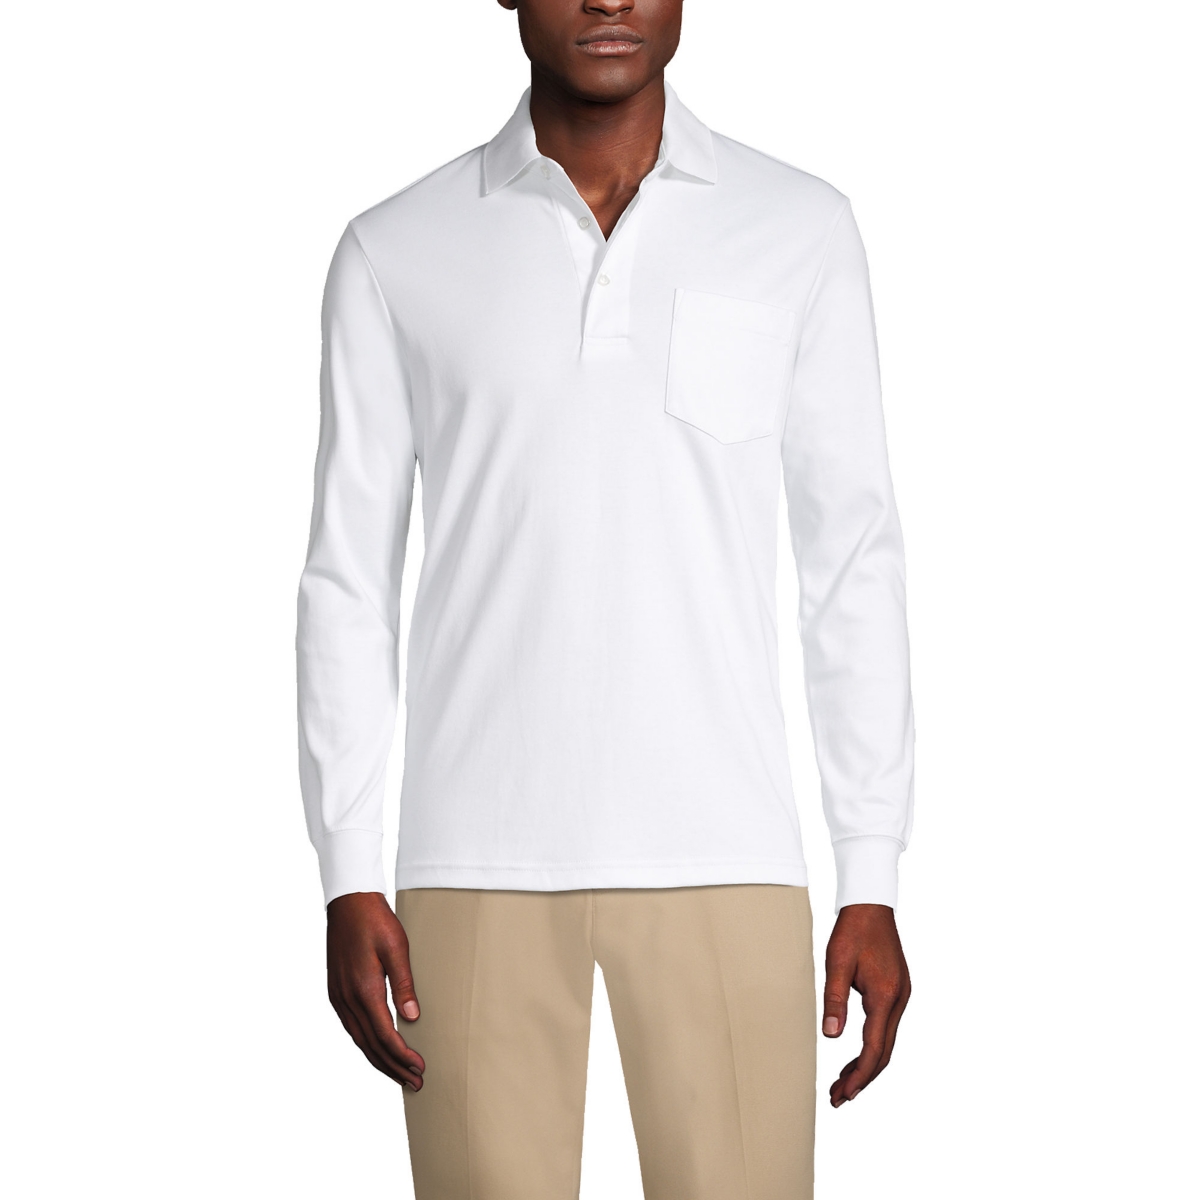 Men's Long Sleeve Cotton Supima Polo Shirt with Pocket - White